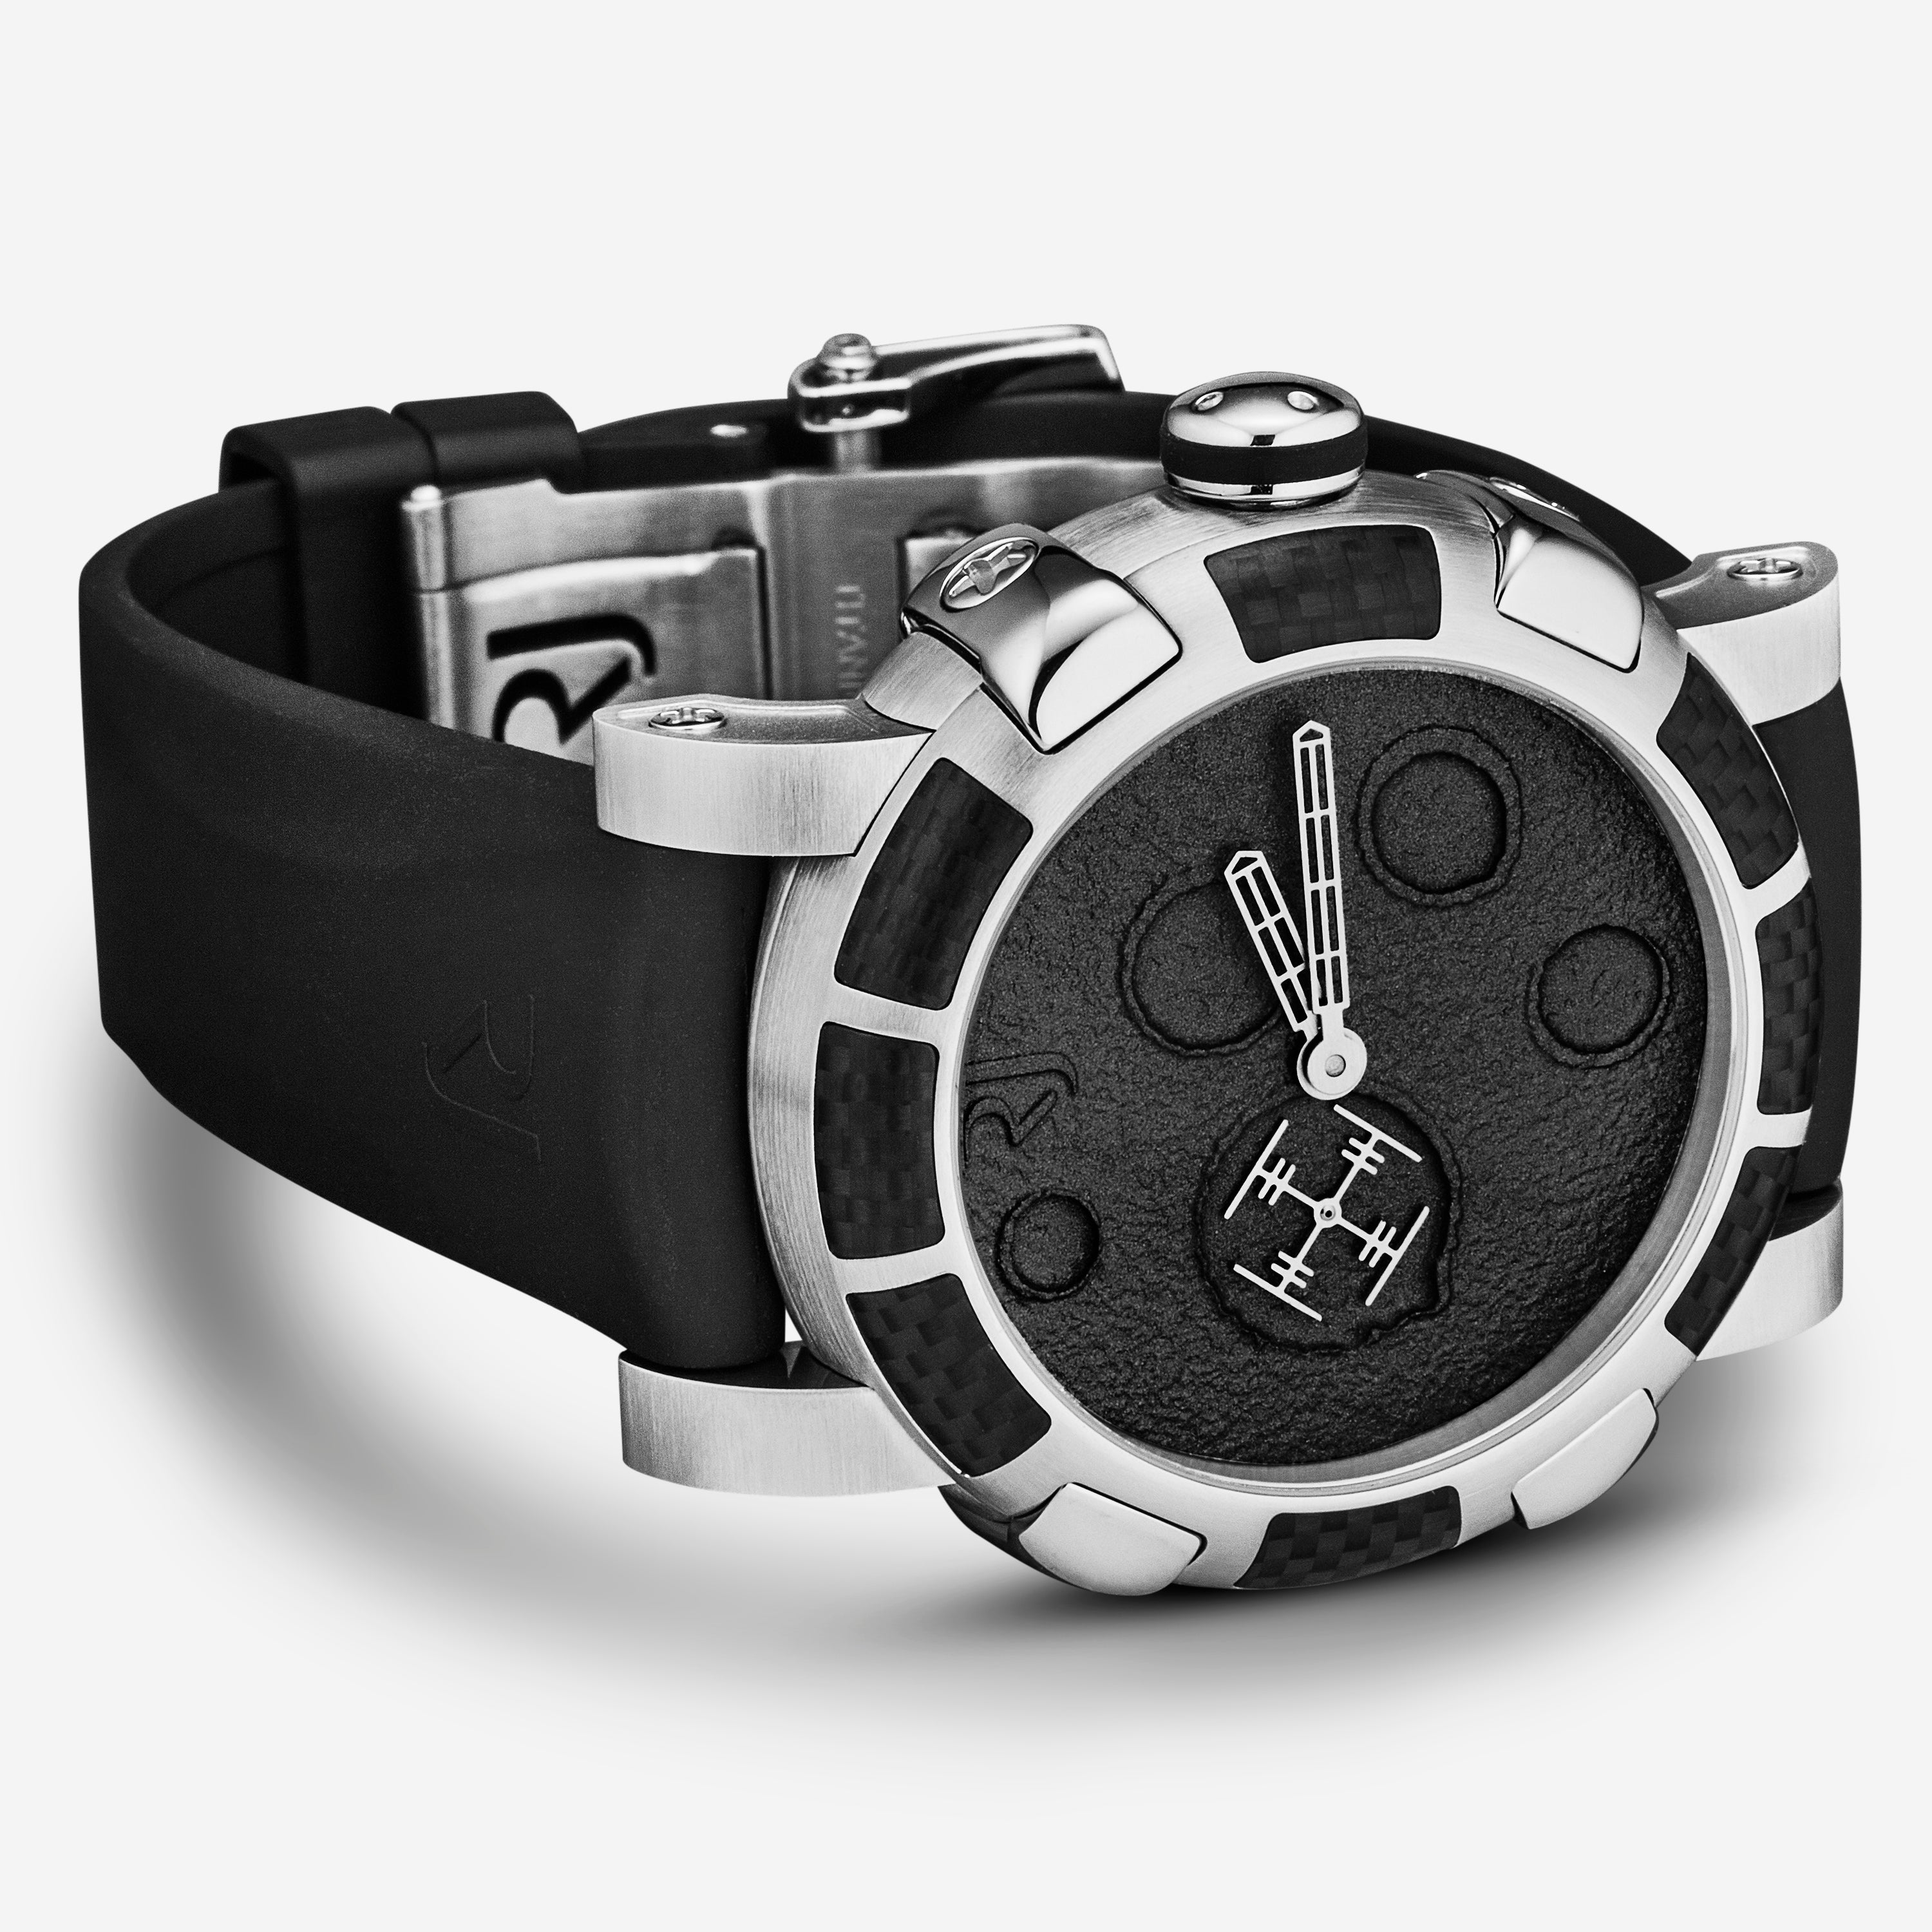 Romain Jerome Moon Dust Black Dial Automatic Men's Watch RJMDAU.101.10